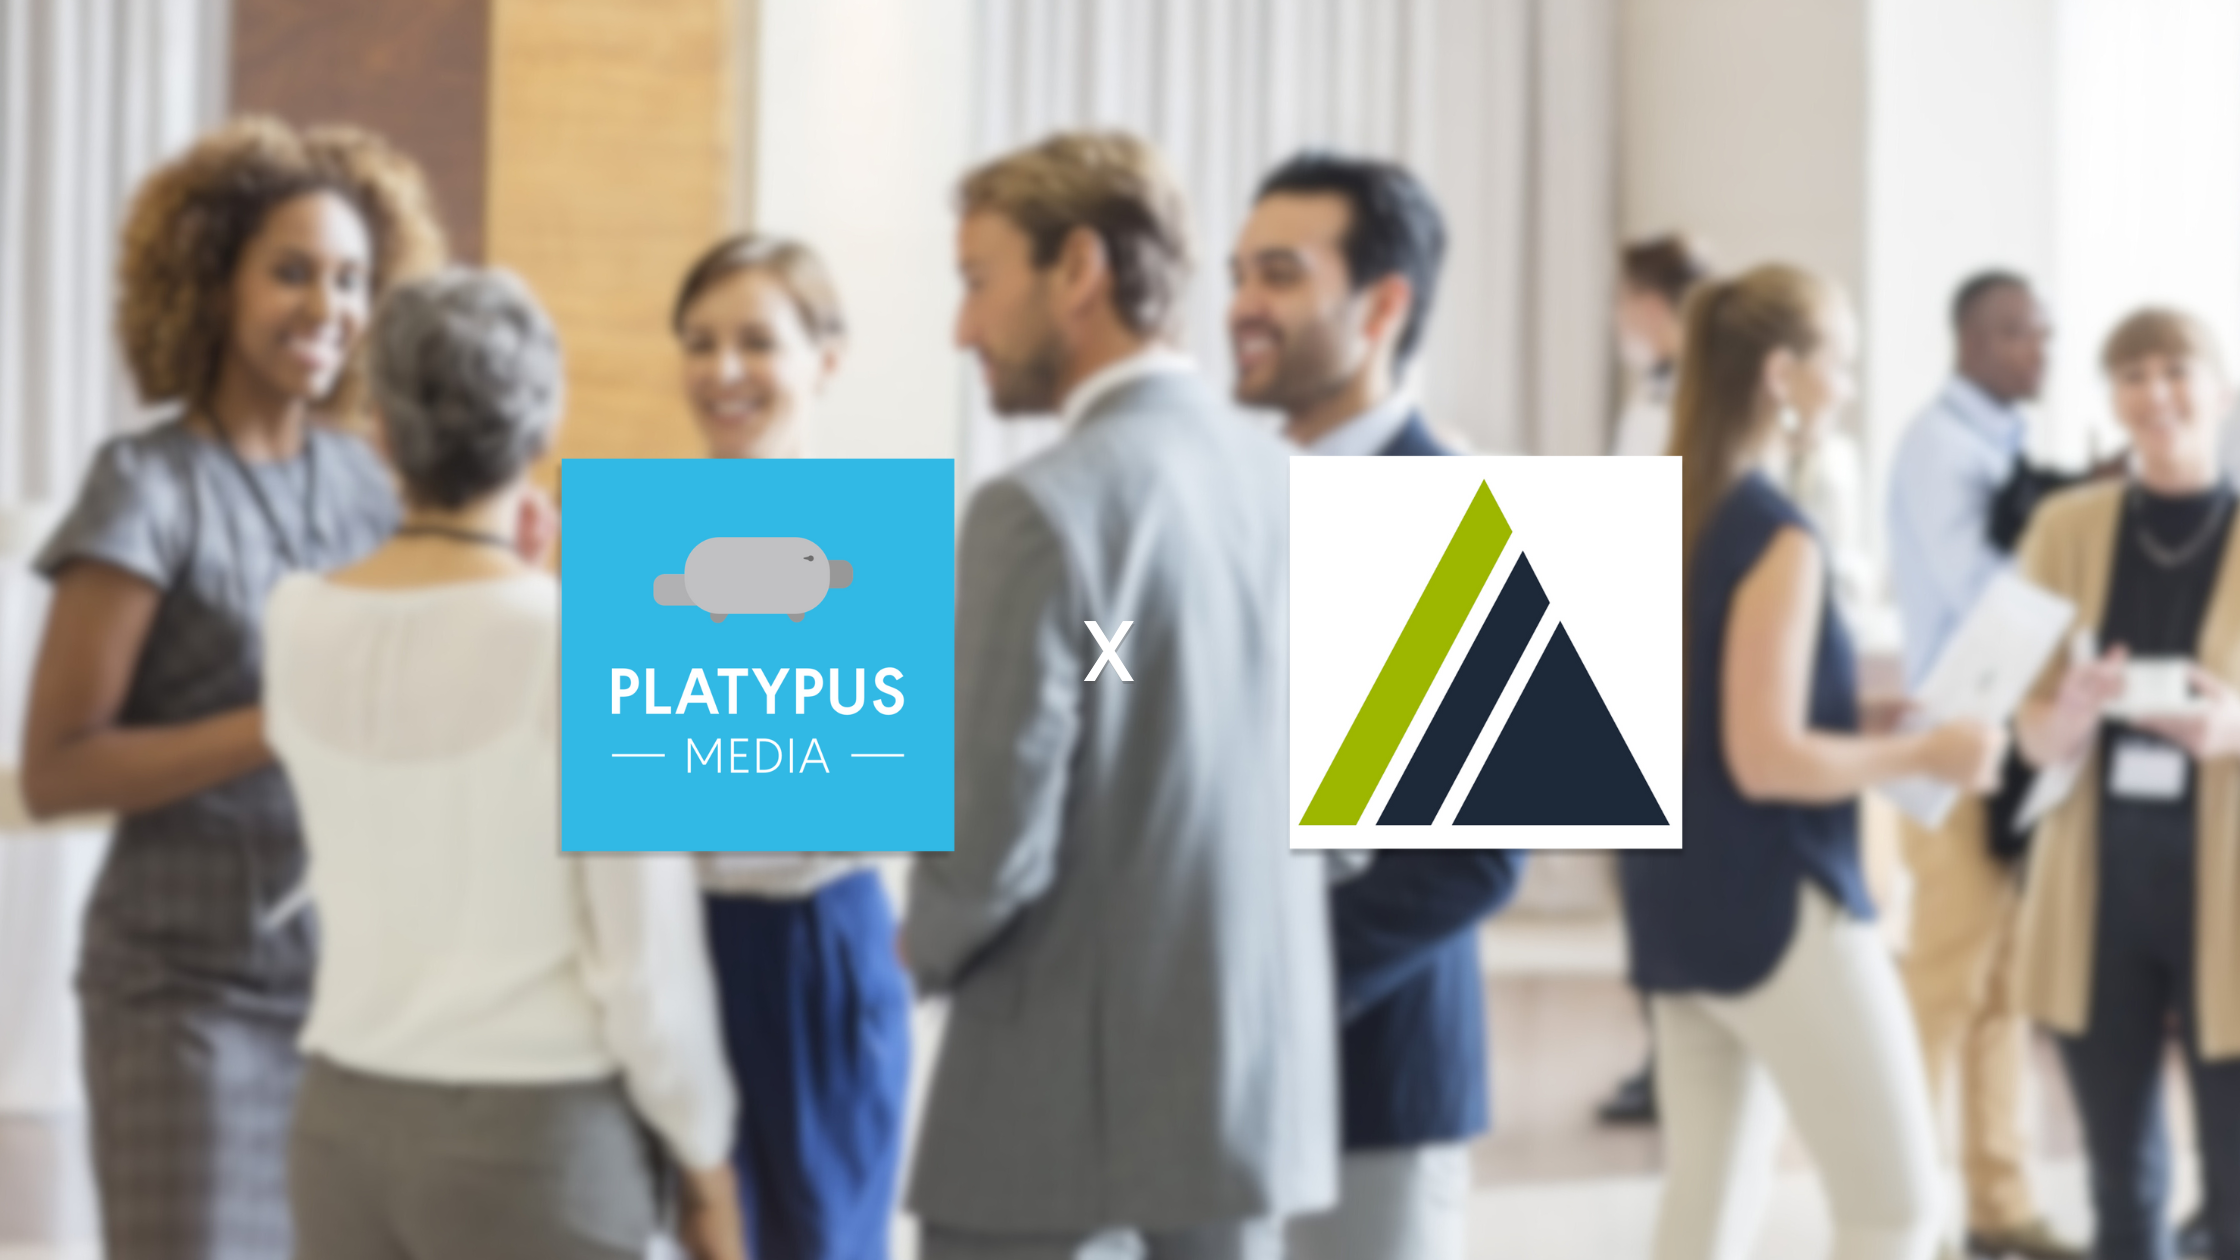 Platypus Media x Chartered IIA - Facebook Ads Case Study